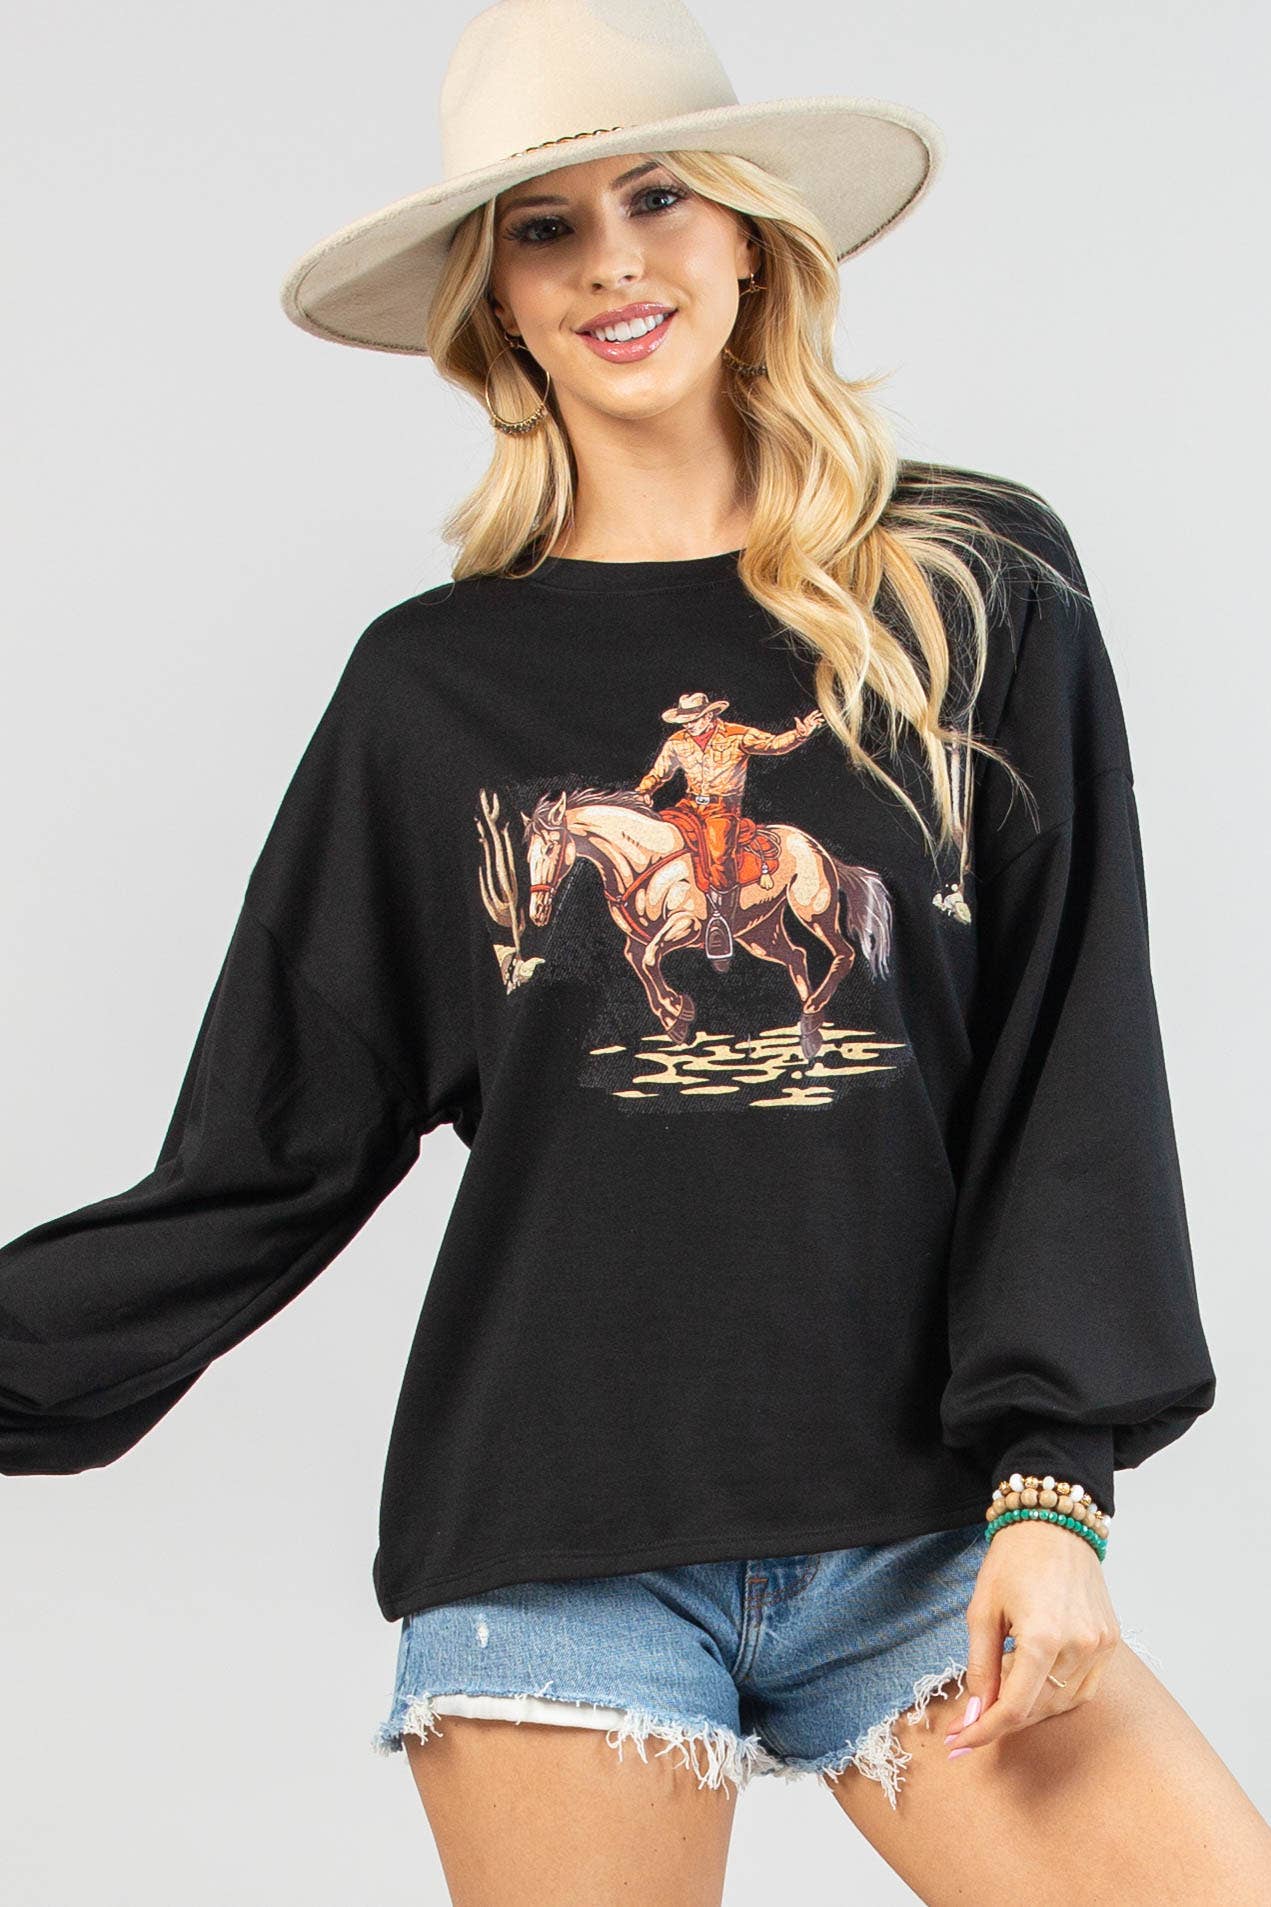 Western Vintage Cowboy & Horse Graphic Sweatshirt at Bourbon Cowgirl